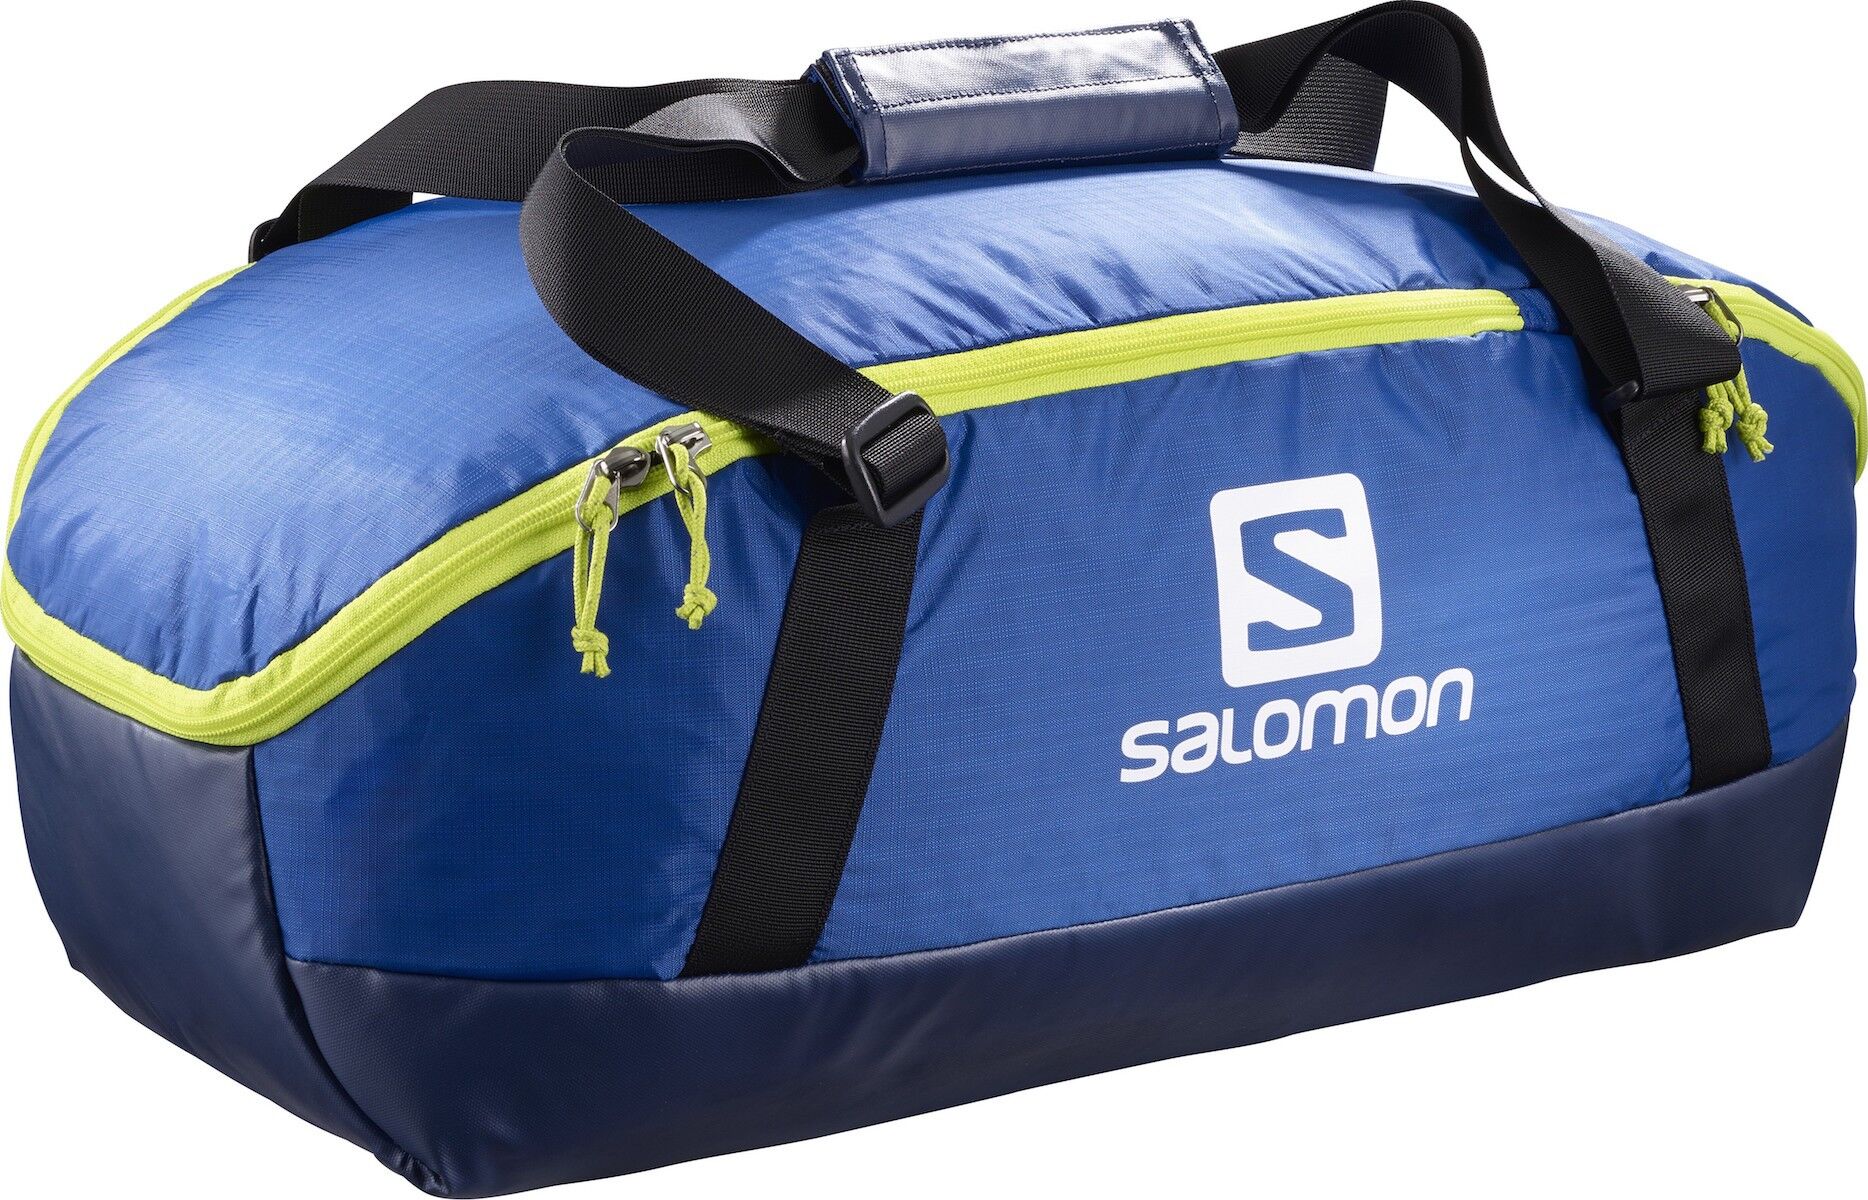 Salomon - Prolog 40 - Luggage